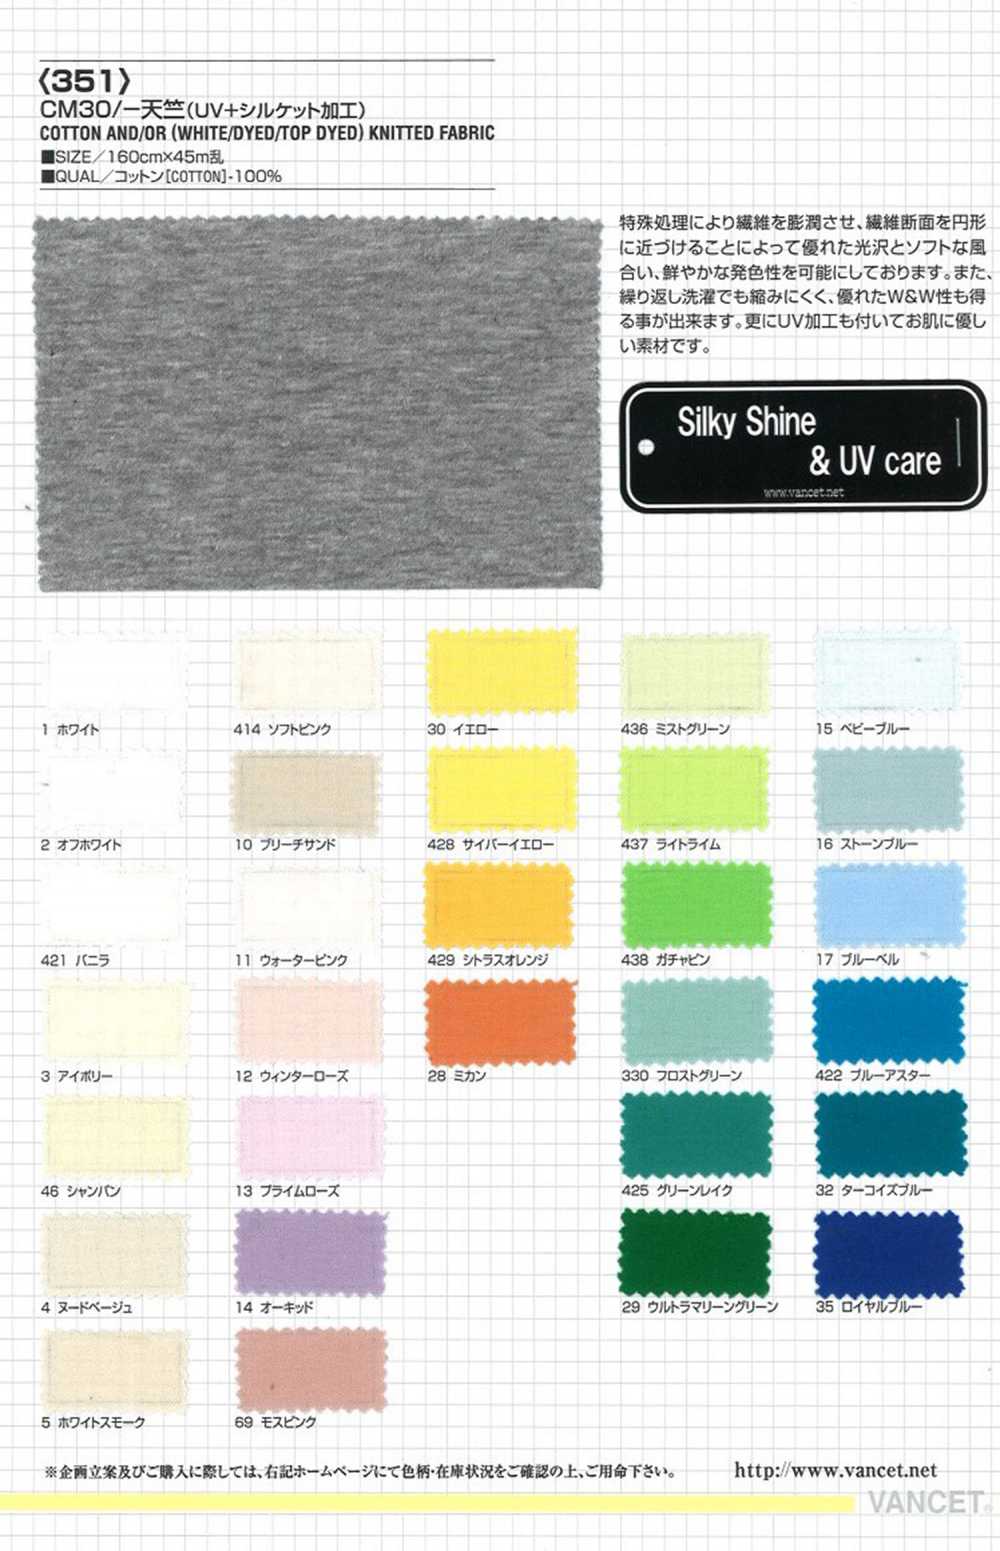 351 Jersey /T-cloth (UV Mercerized)[Textile / Fabric] VANCET